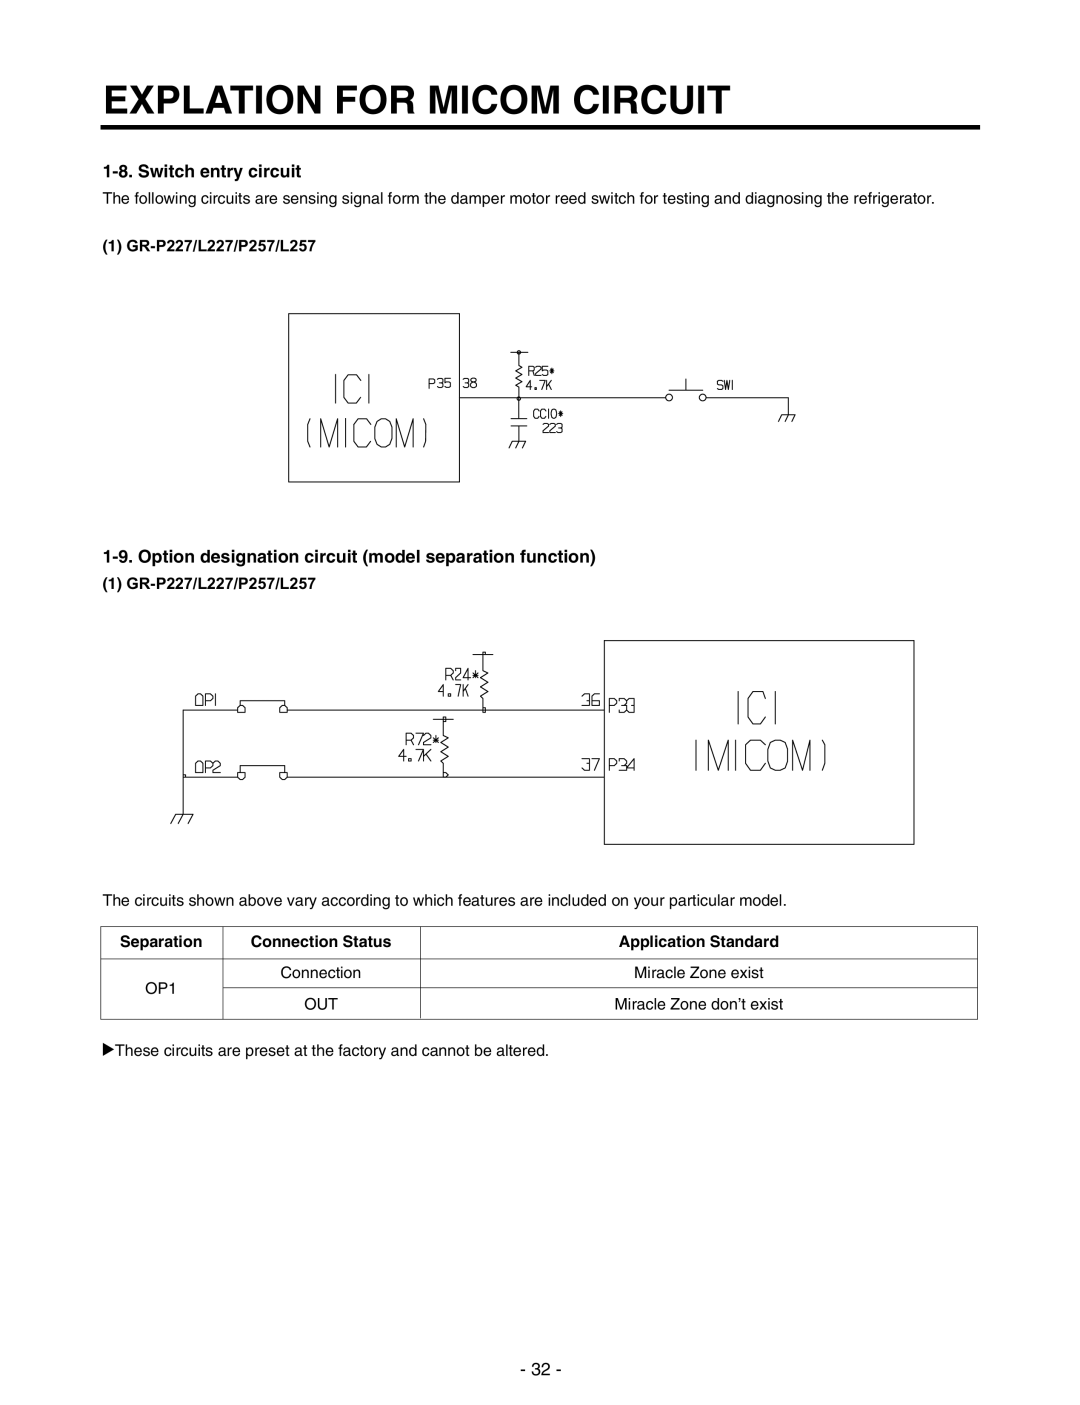 LG Electronics GR-P227/L227 Switch entry circuit, Option designation circuit model separation function, Separation 